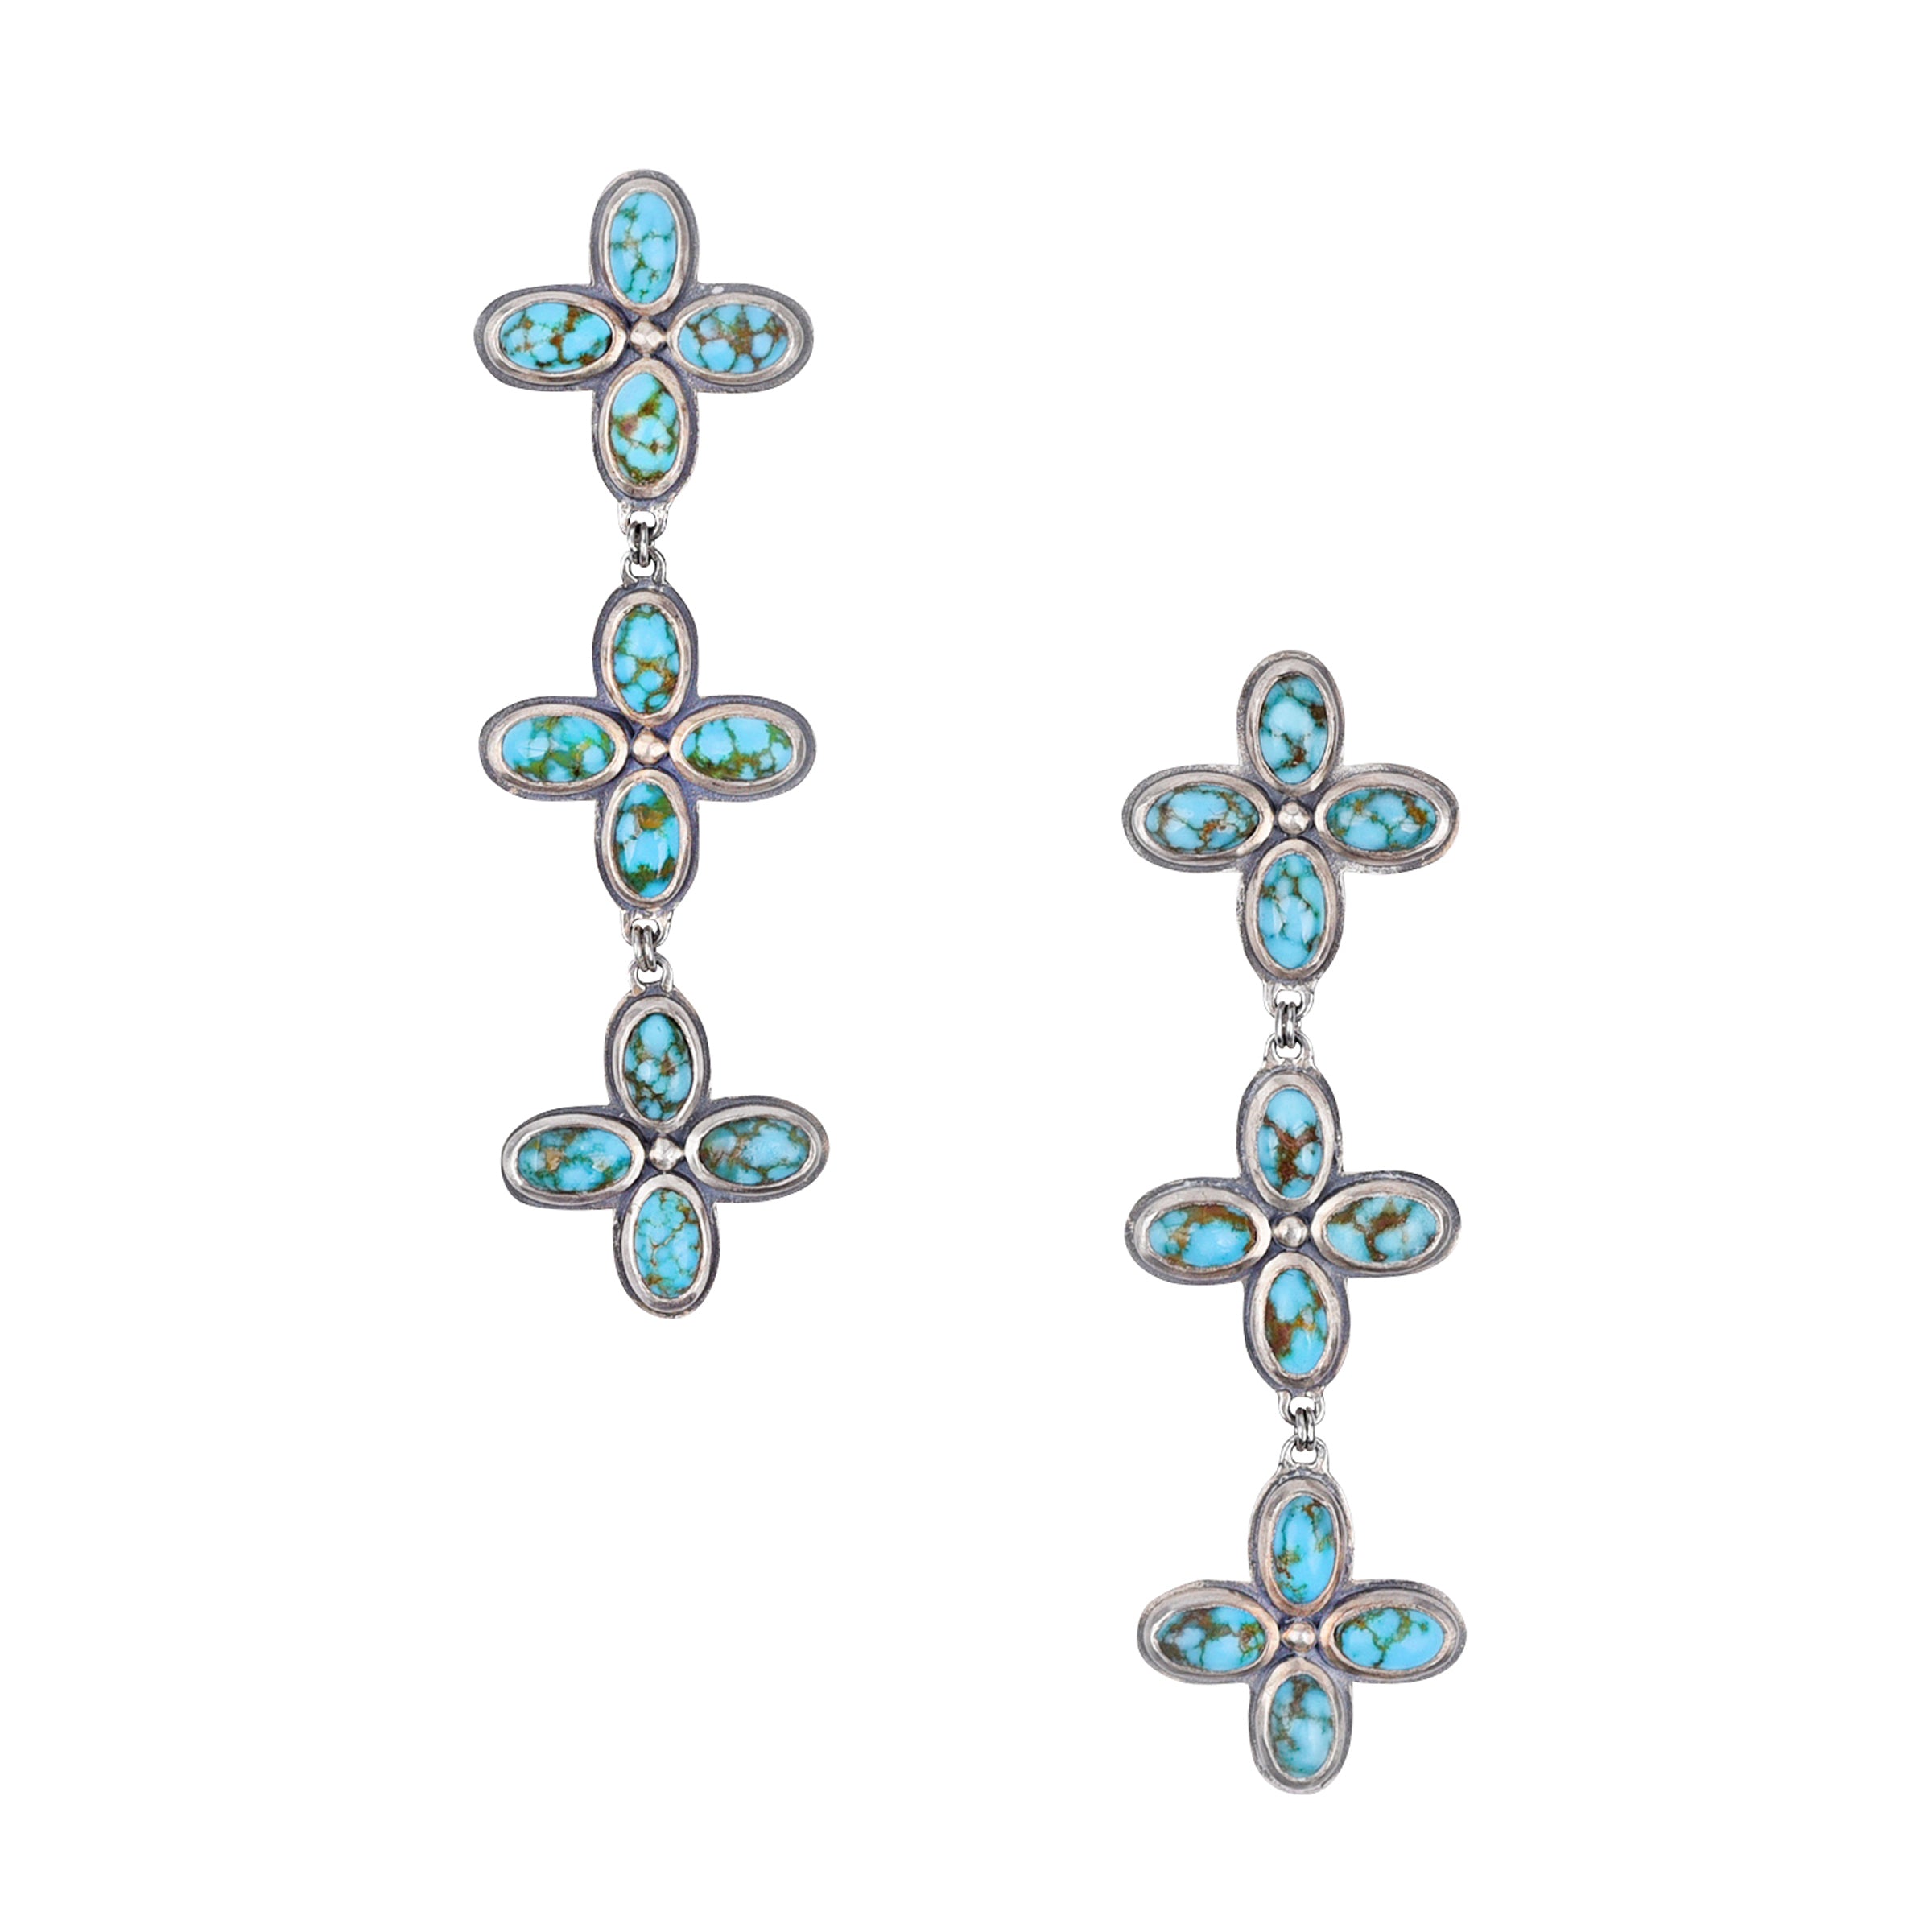 Dennis Hogan Triple Flower Earrings - Spiderweb Turquoise